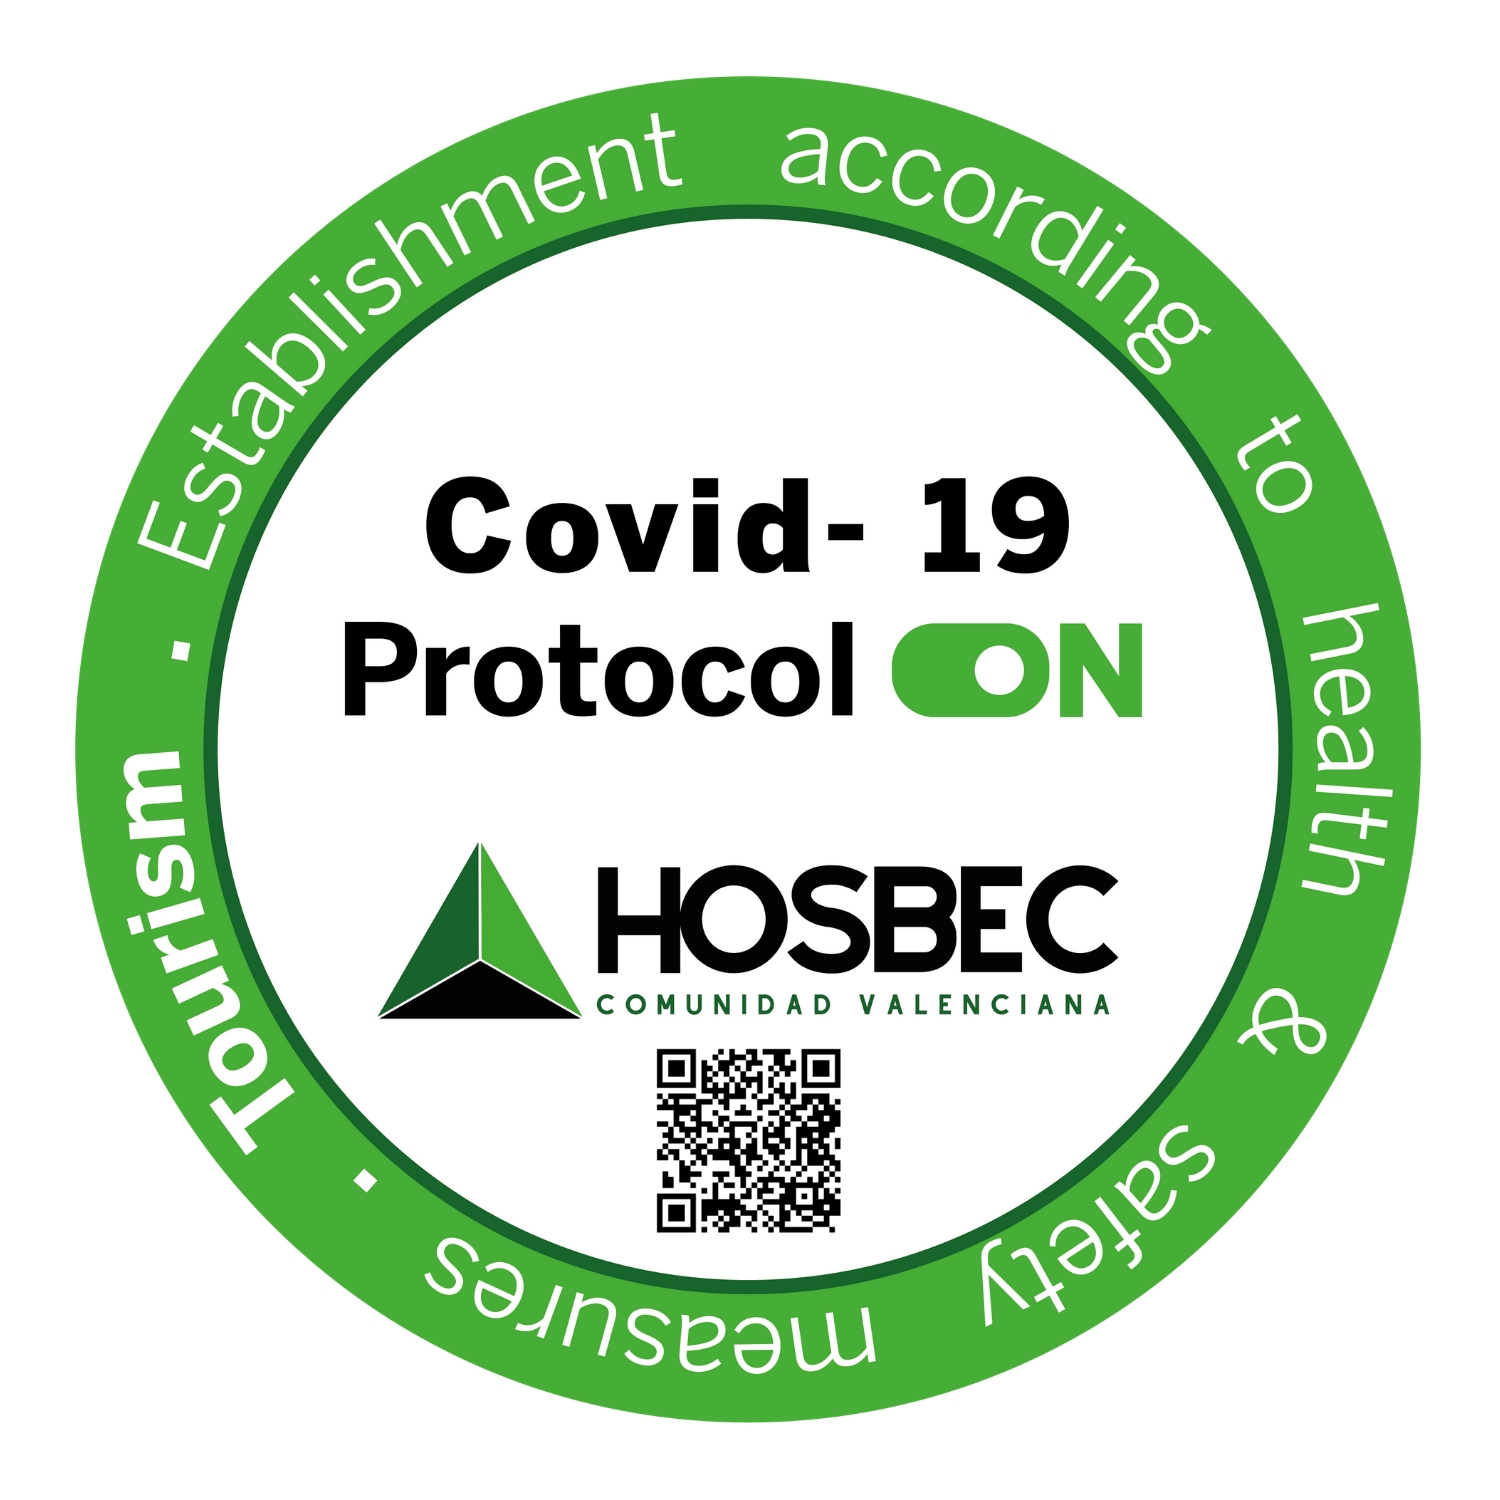 Hosbec Covid19 Protocol